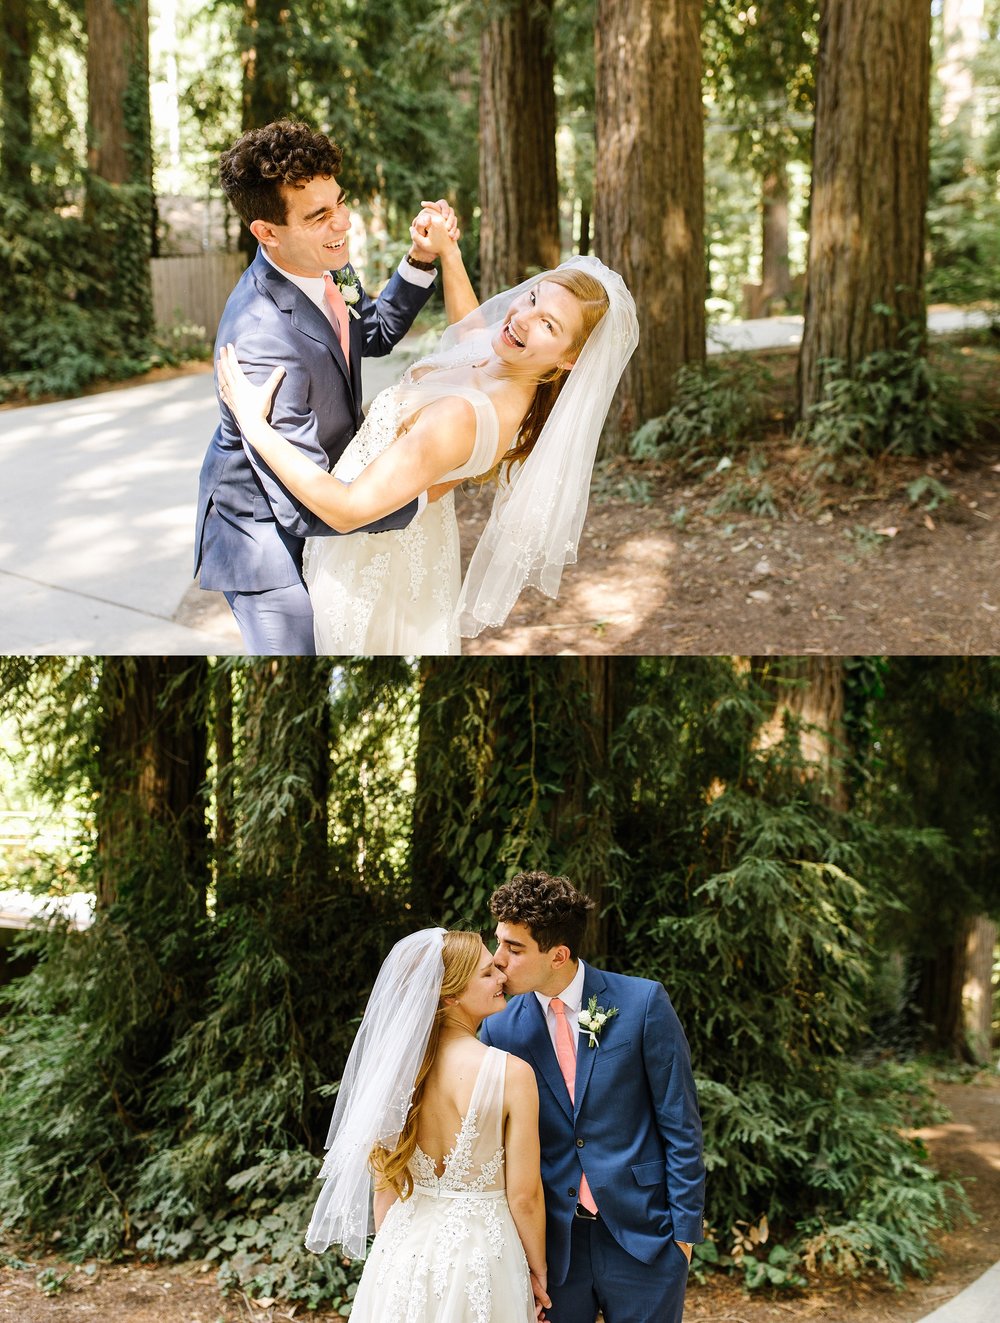 Amphitheatre-of-the-Redwoods-wedding-erikariley_chelsea-dier-photography_0008.jpg